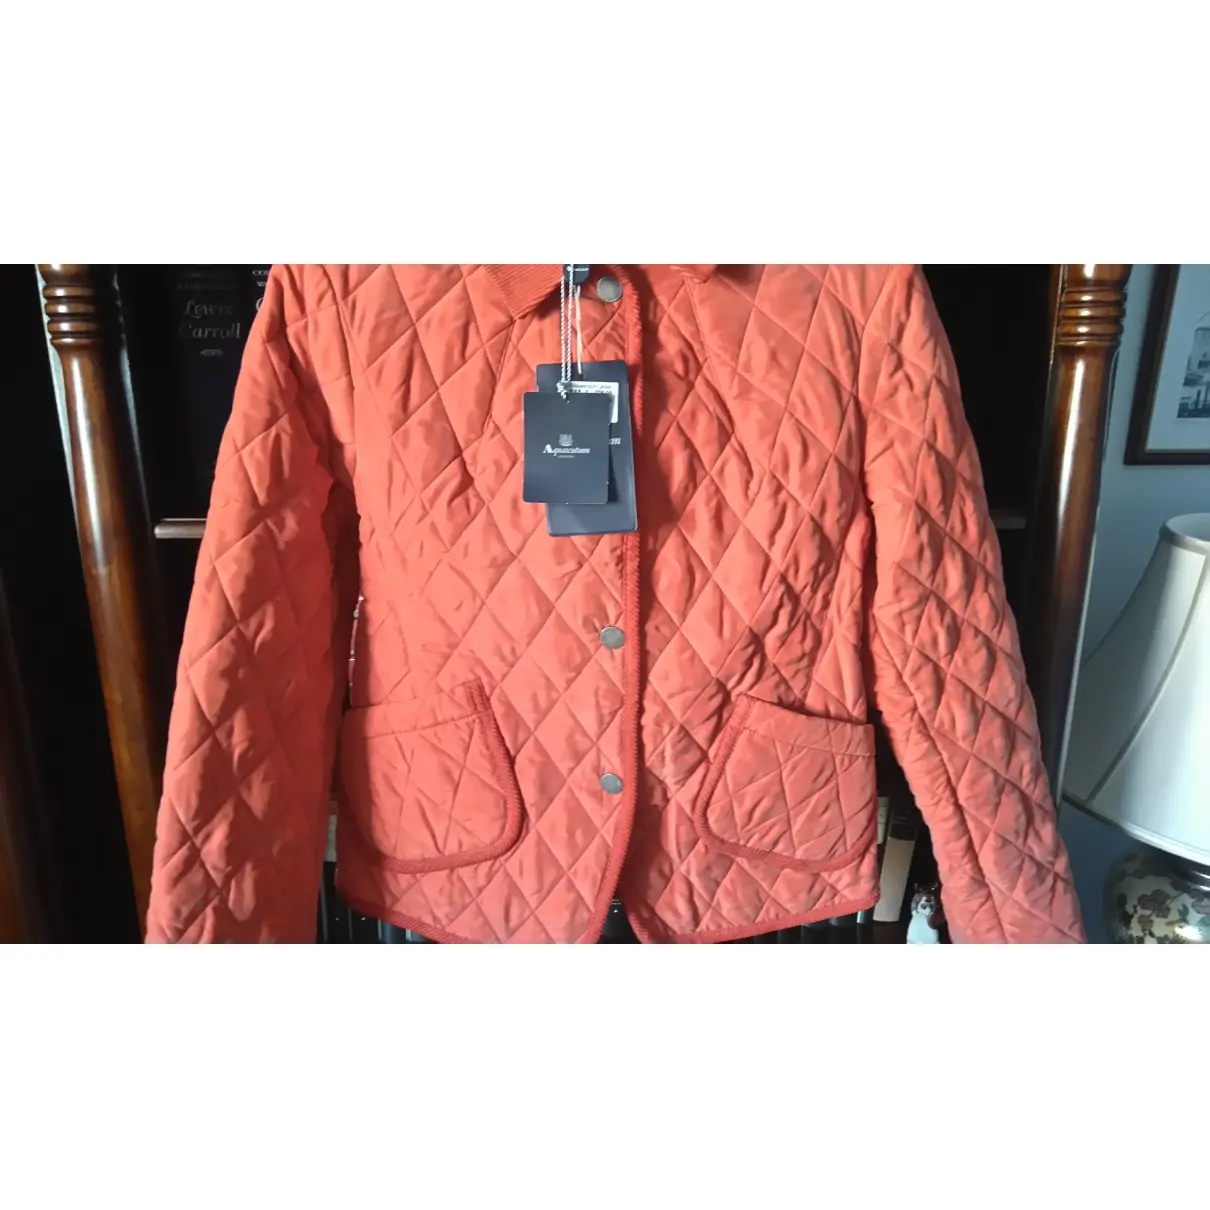 Aquascutum Silk jacket for sale